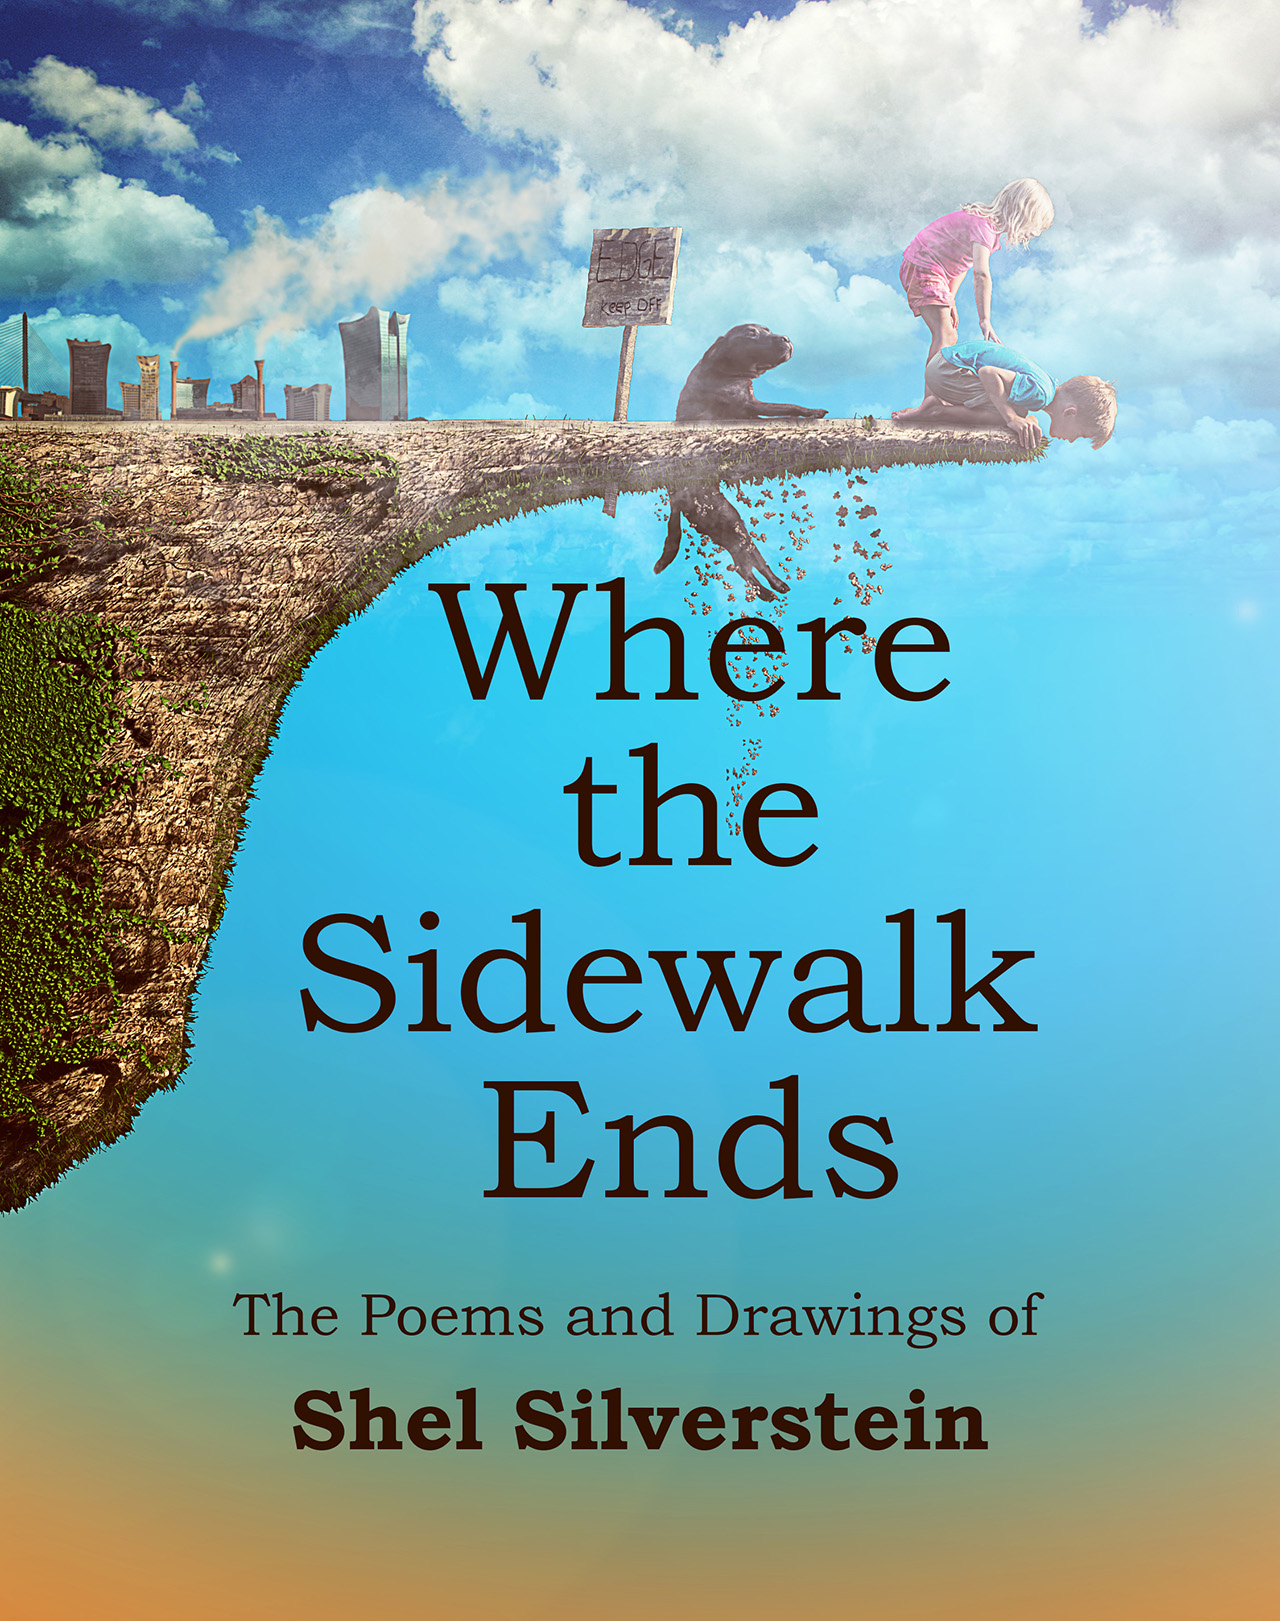 Dave Gawron & Rob Wagner | "Where the Sidewalk Ends" by Shel Silverstein